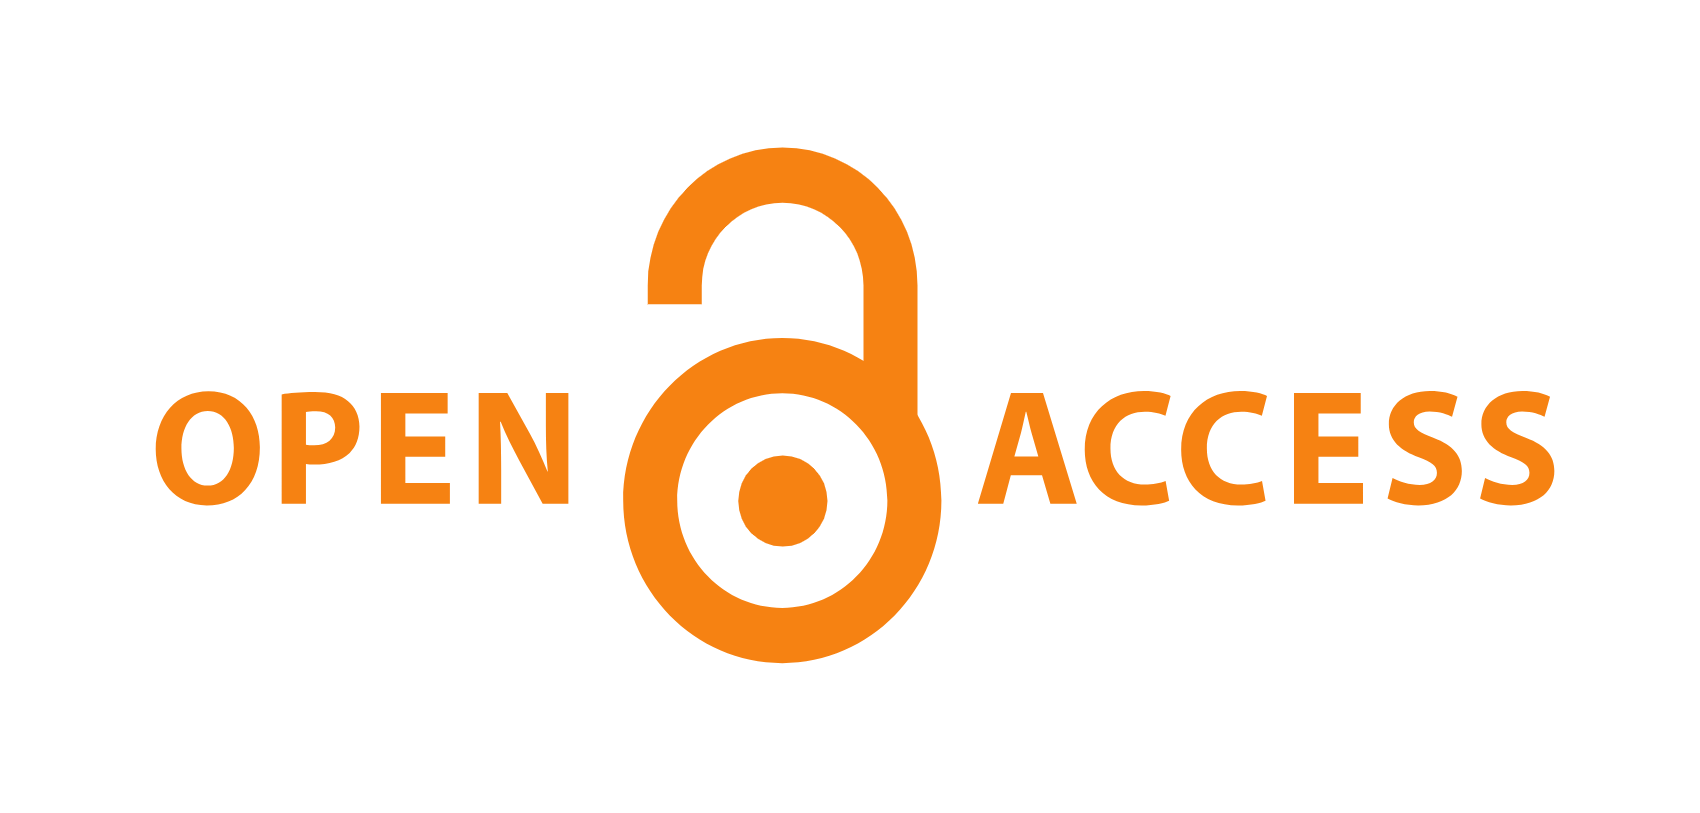 Open access logo. Открытый доступ. Свободный доступ. Открытого доступа. Сайт свободный доступ